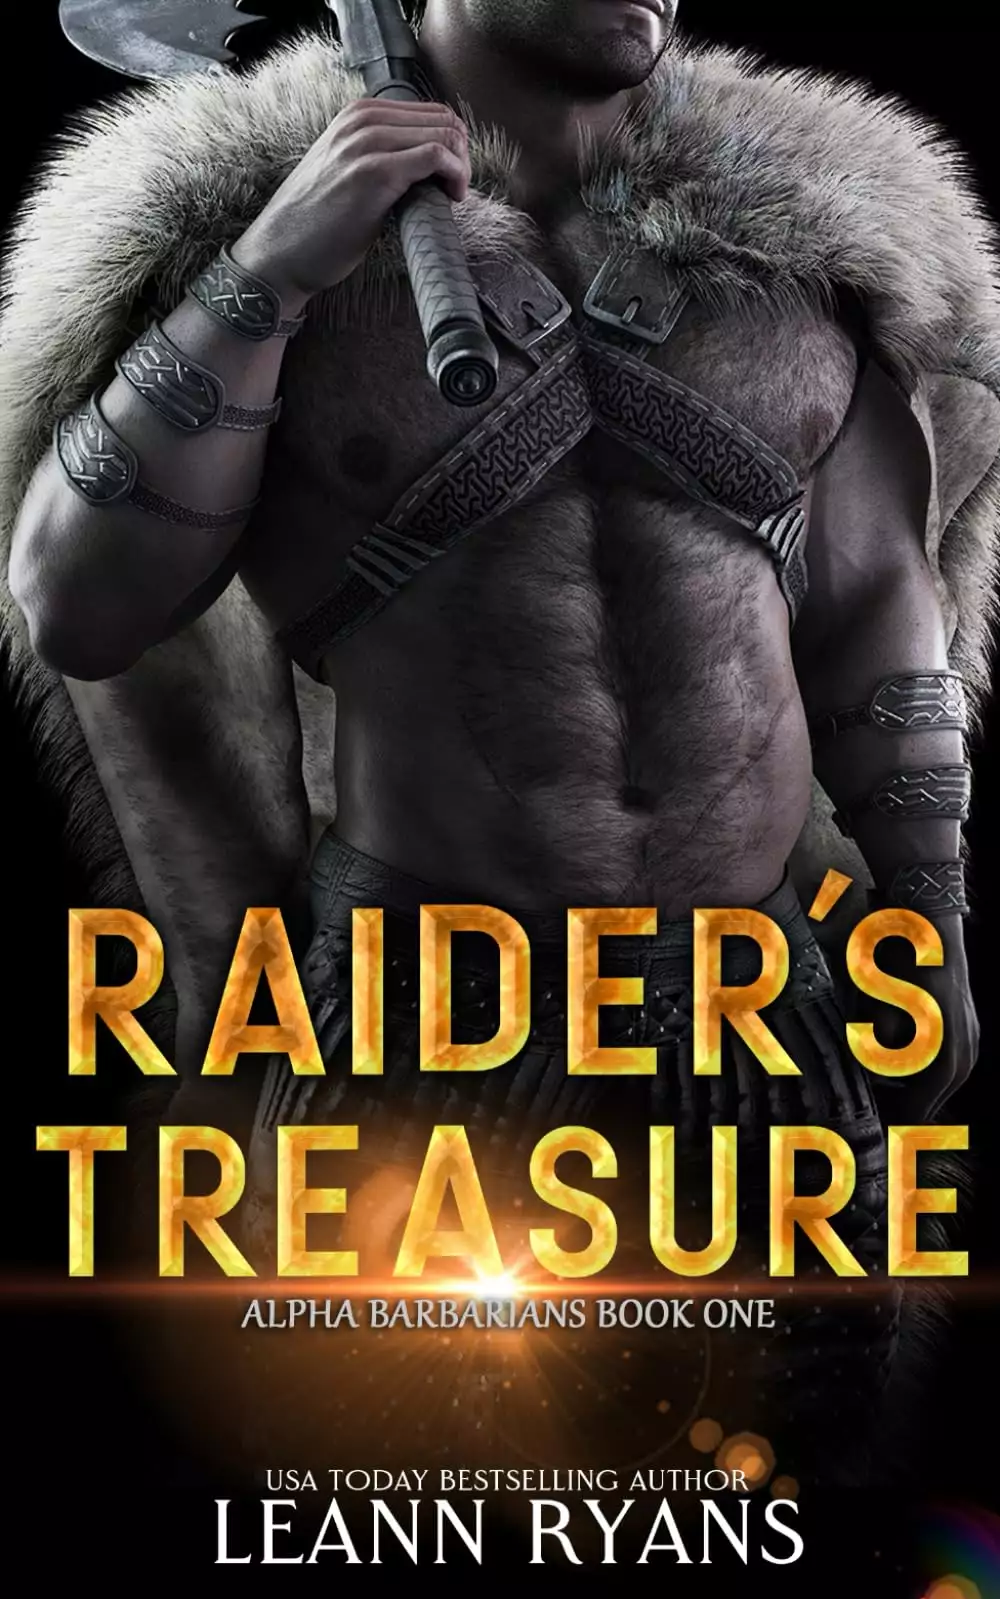 Raider’s Treasure